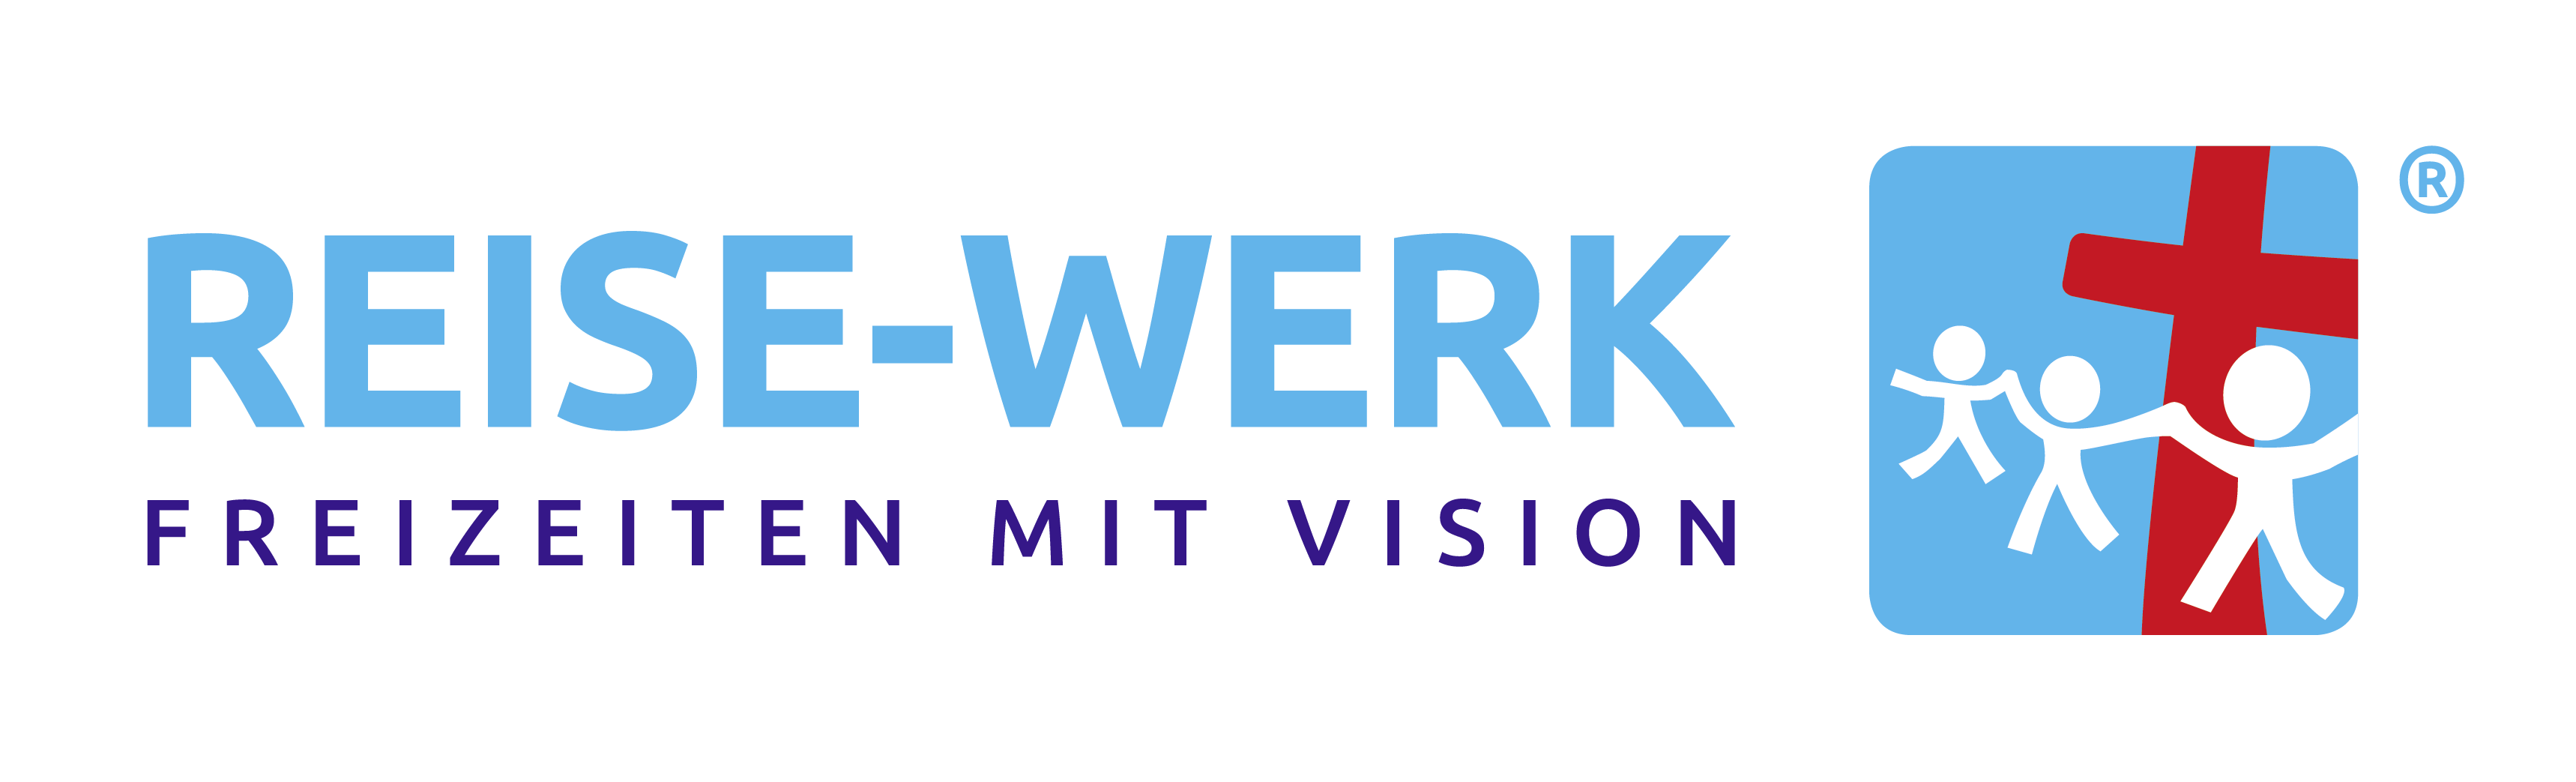 Reisewerk Logo